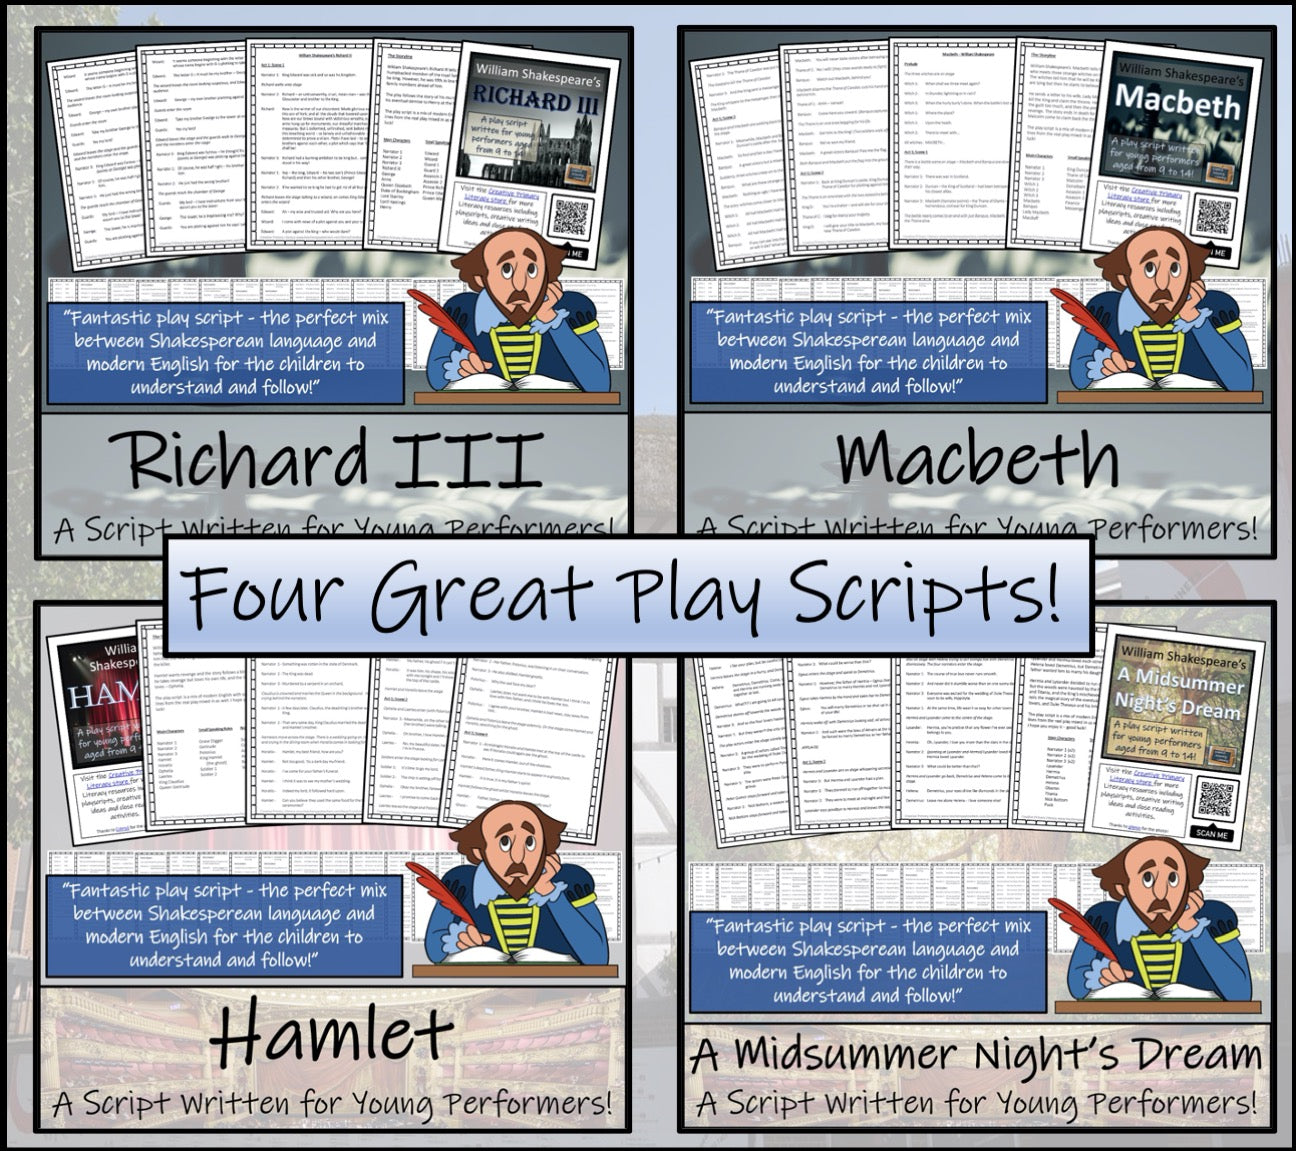 William Shakespeare Mega Bundle of Play Scripts & Activities | 5th & 6th Grade